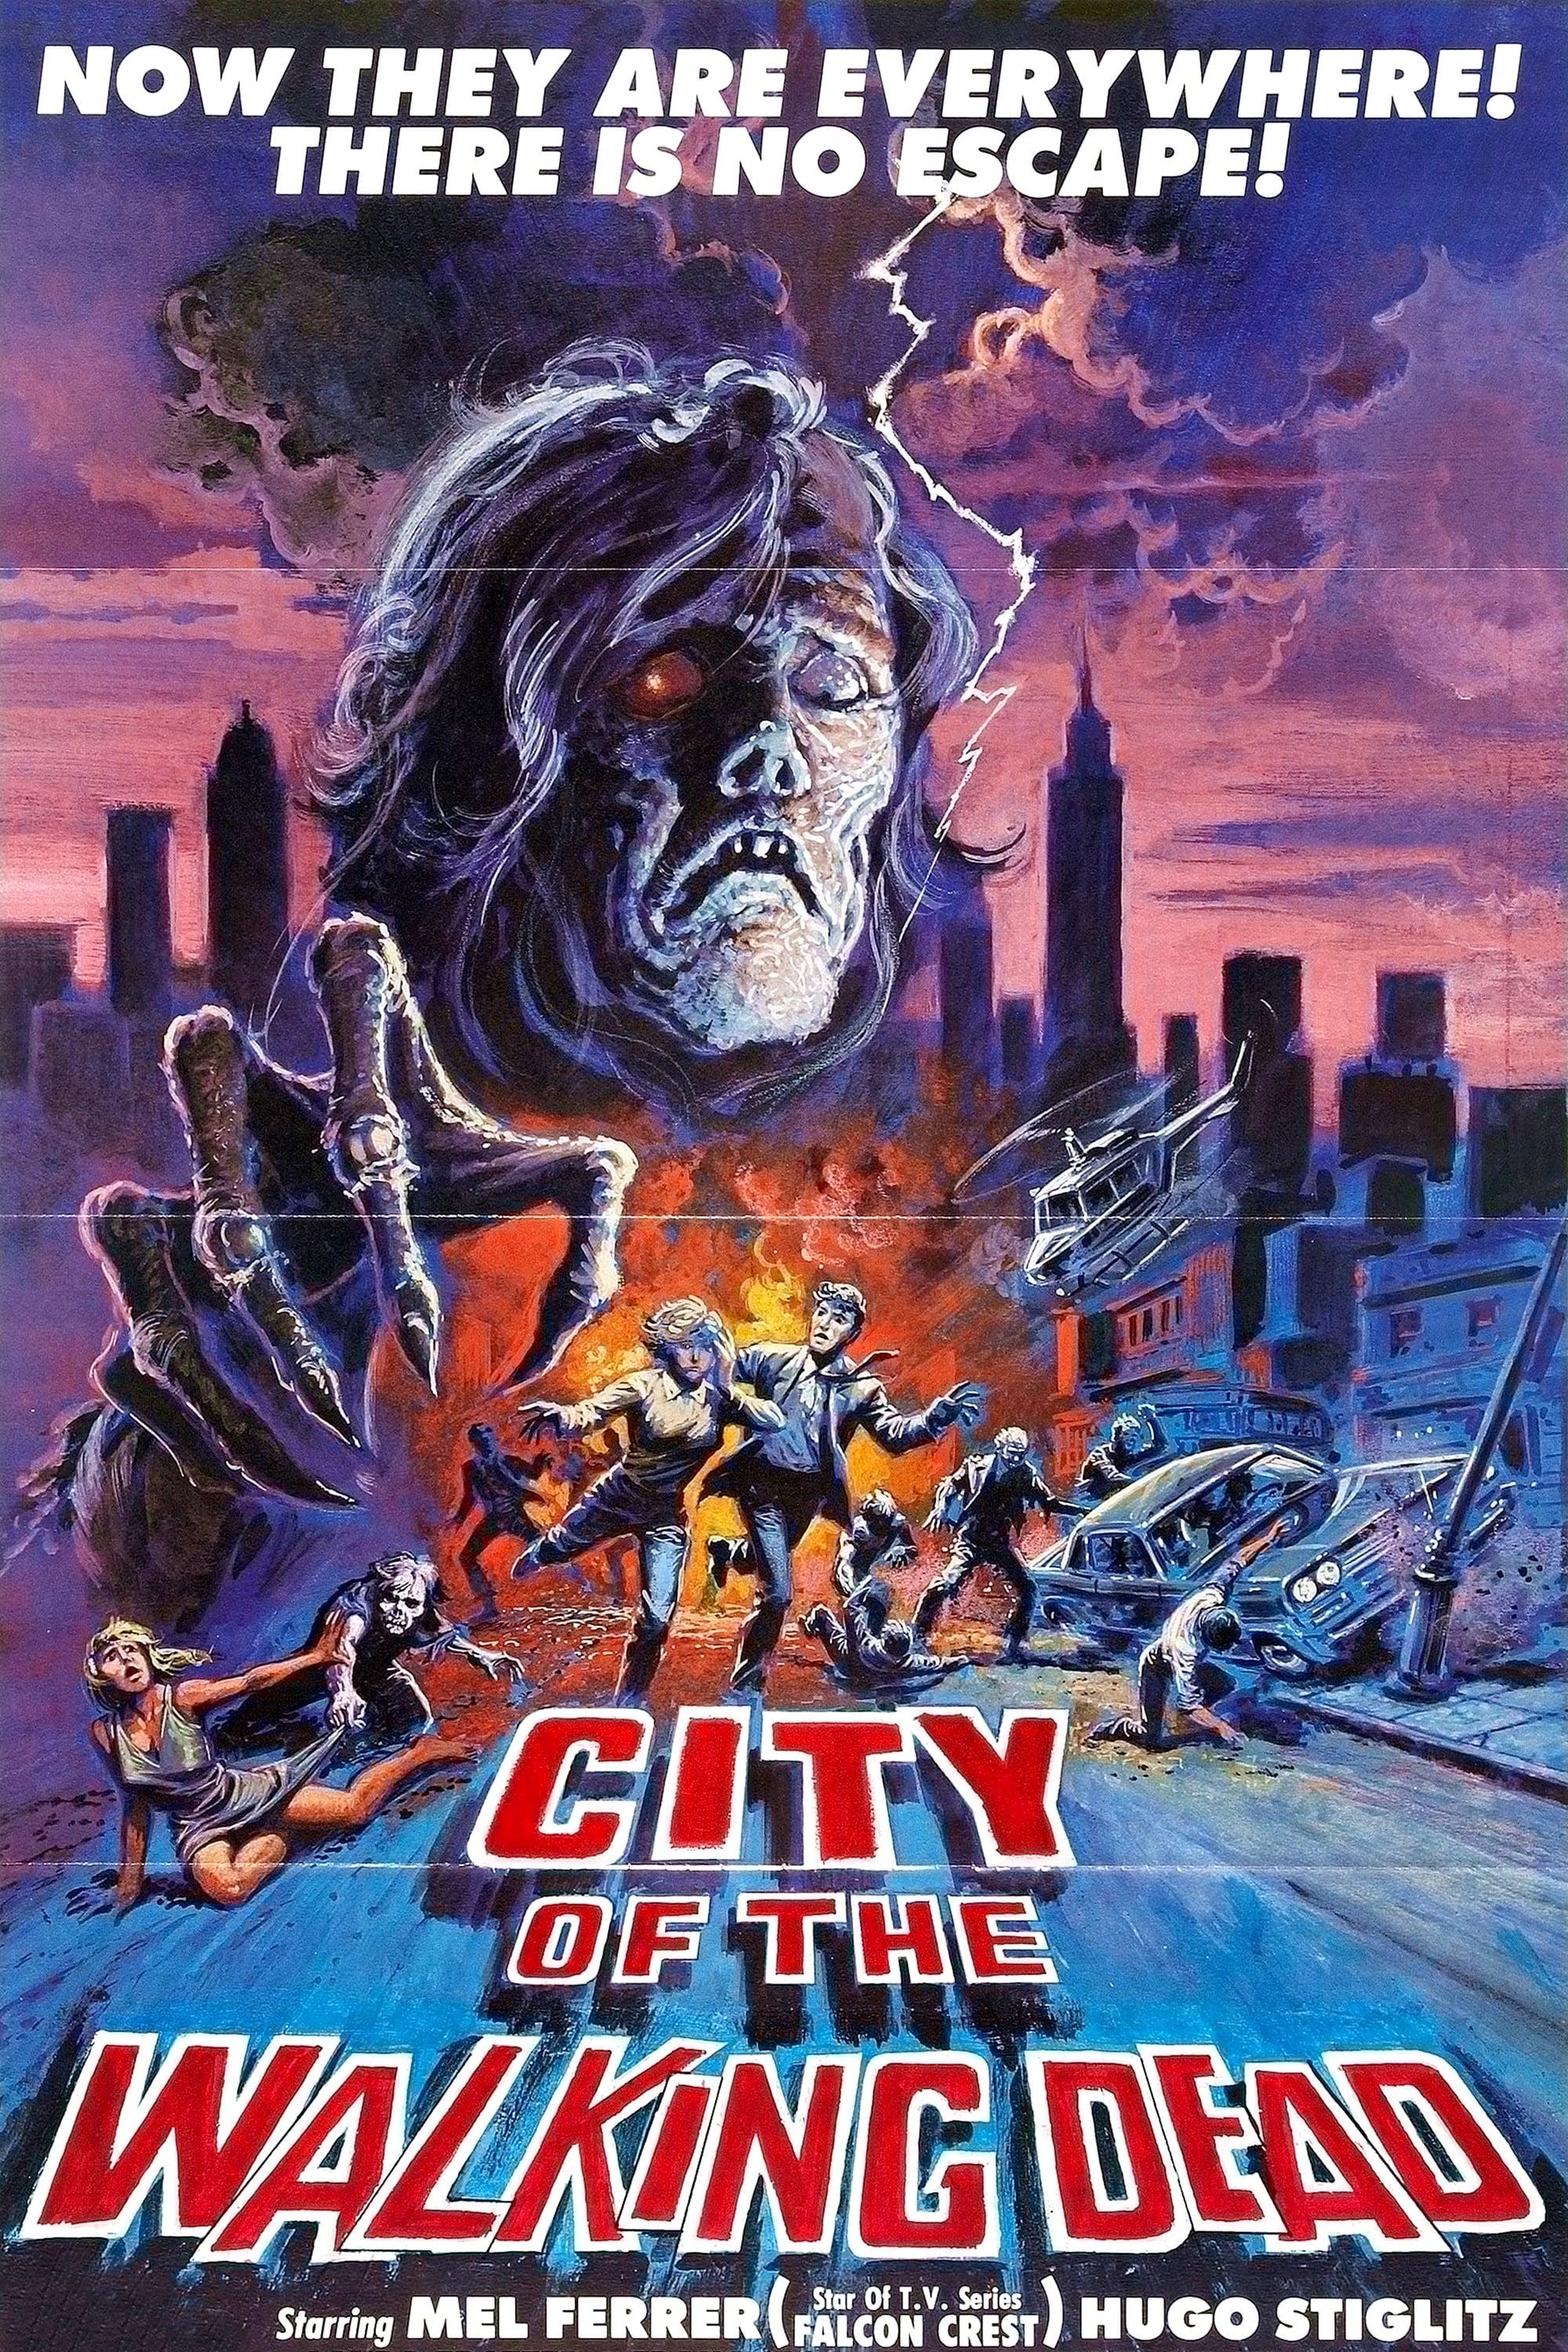 Nightmare City poster